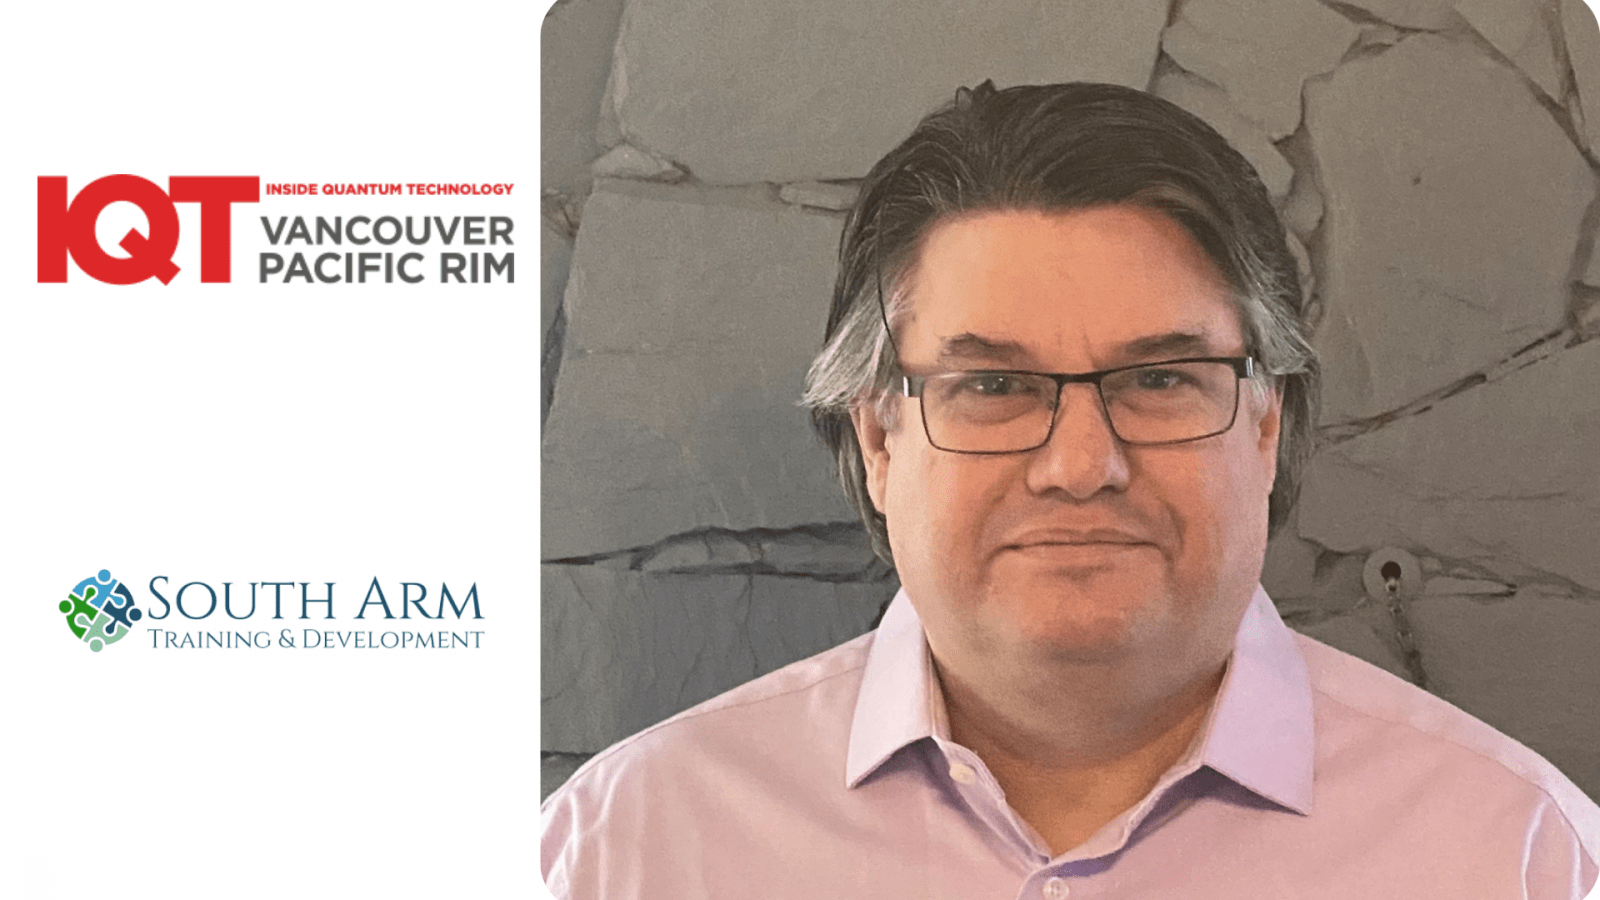 Dennis Green, Kepala Sekolah di South Arm Training and Development Ltd. adalah Pembicara IQT Vancouver/Pacific Rim 2024 - Inside Quantum Technology